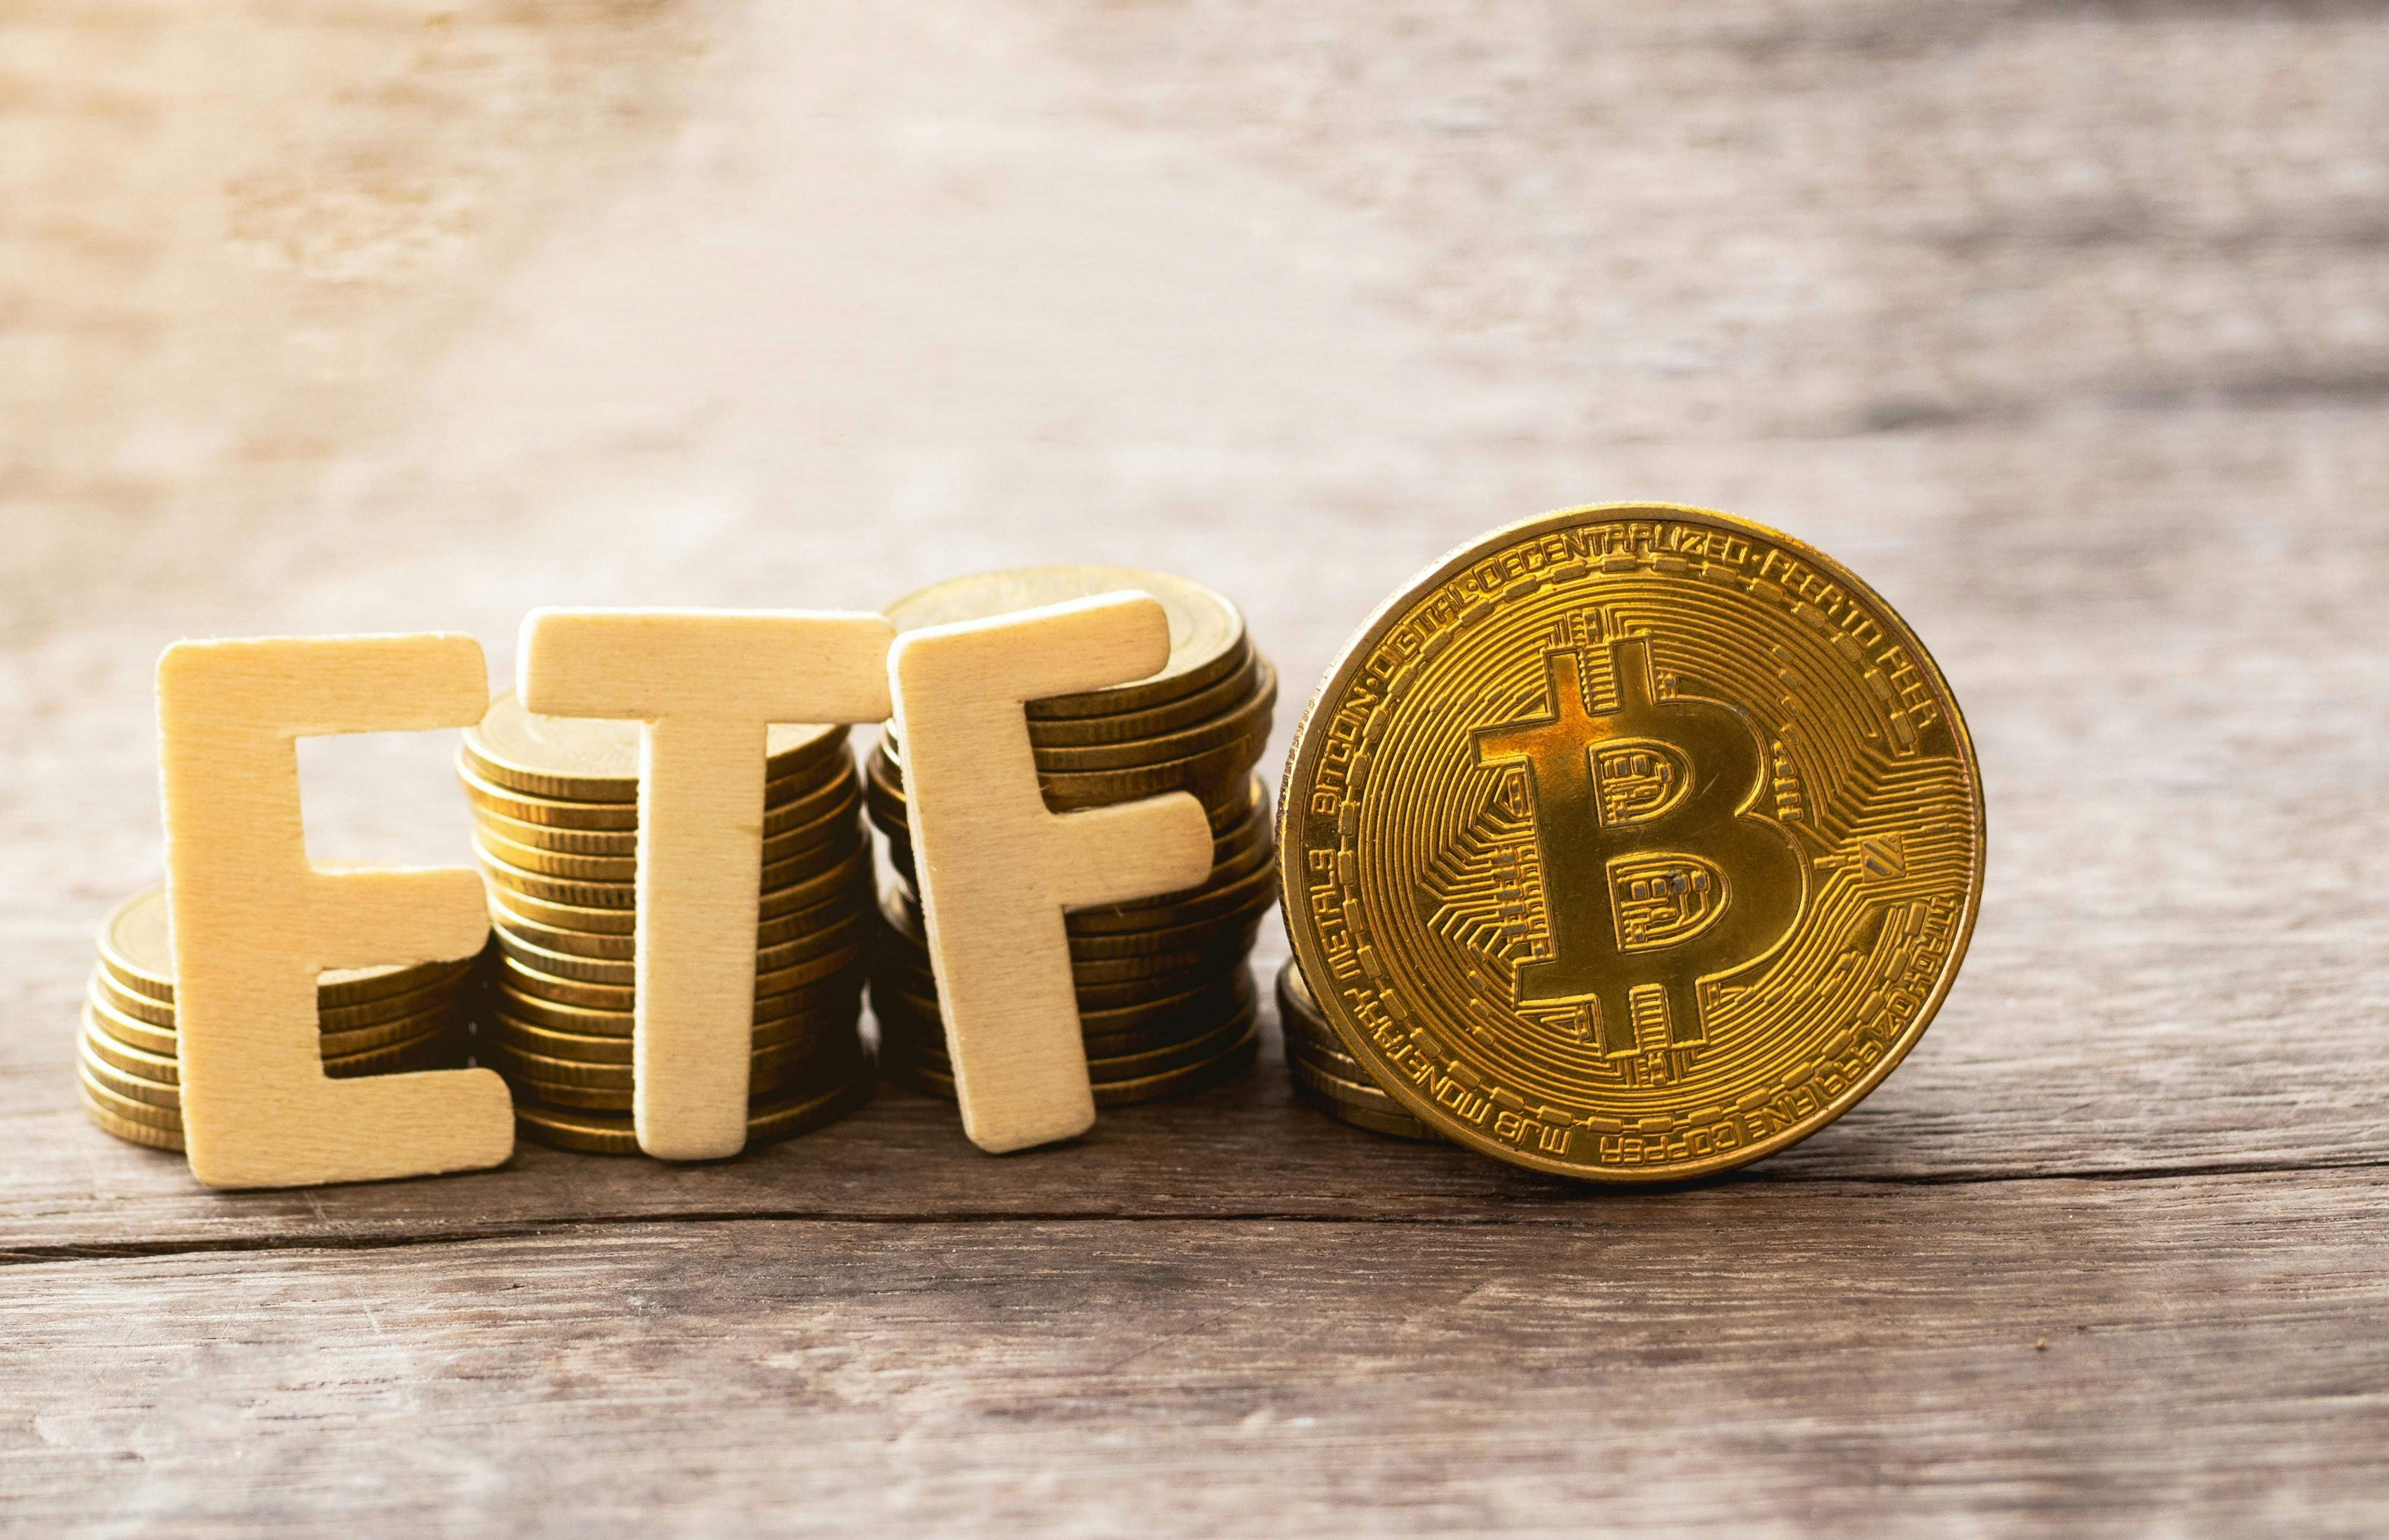 "Bitcoin ETF: Cobertura mediática coordinada"